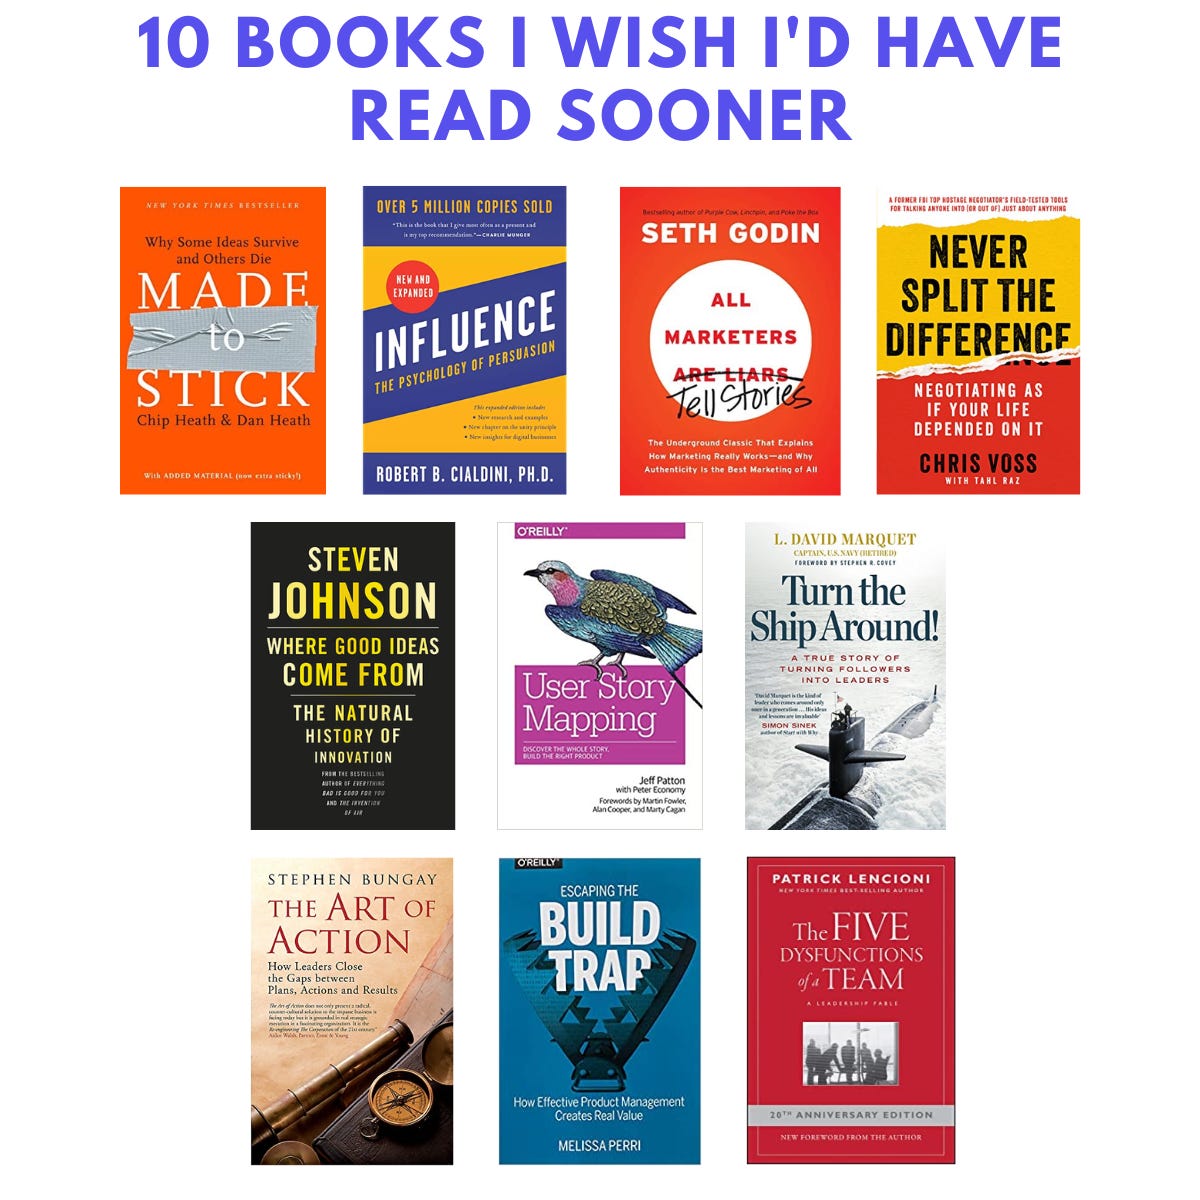 10 Books I Wish I'd Have Read Sooner